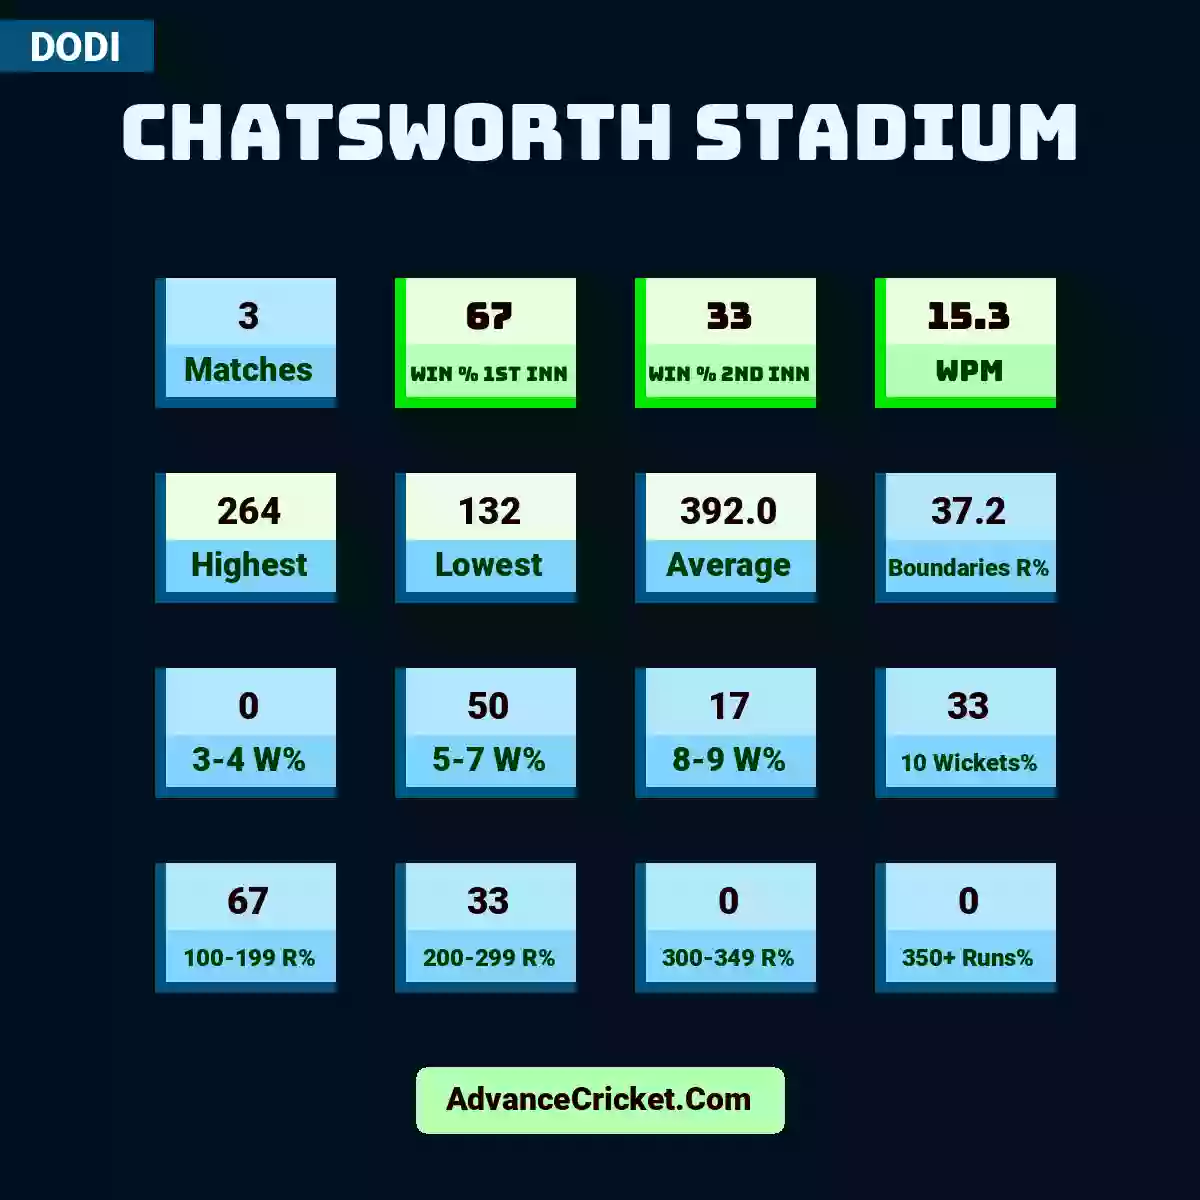 Image showing Chatsworth Stadium with Matches: 3, Win % 1st Inn: 67, Win % 2nd Inn: 33, WPM: 15.3, Highest: 264, Lowest: 132, Average: 392.0, Boundaries R%: 37.2, 3-4 W%: 0, 5-7 W%: 50, 8-9 W%: 17, 10 Wickets%: 33, 100-199 R%: 67, 200-299 R%: 33, 300-349 R%: 0, 350+ Runs%: 0.